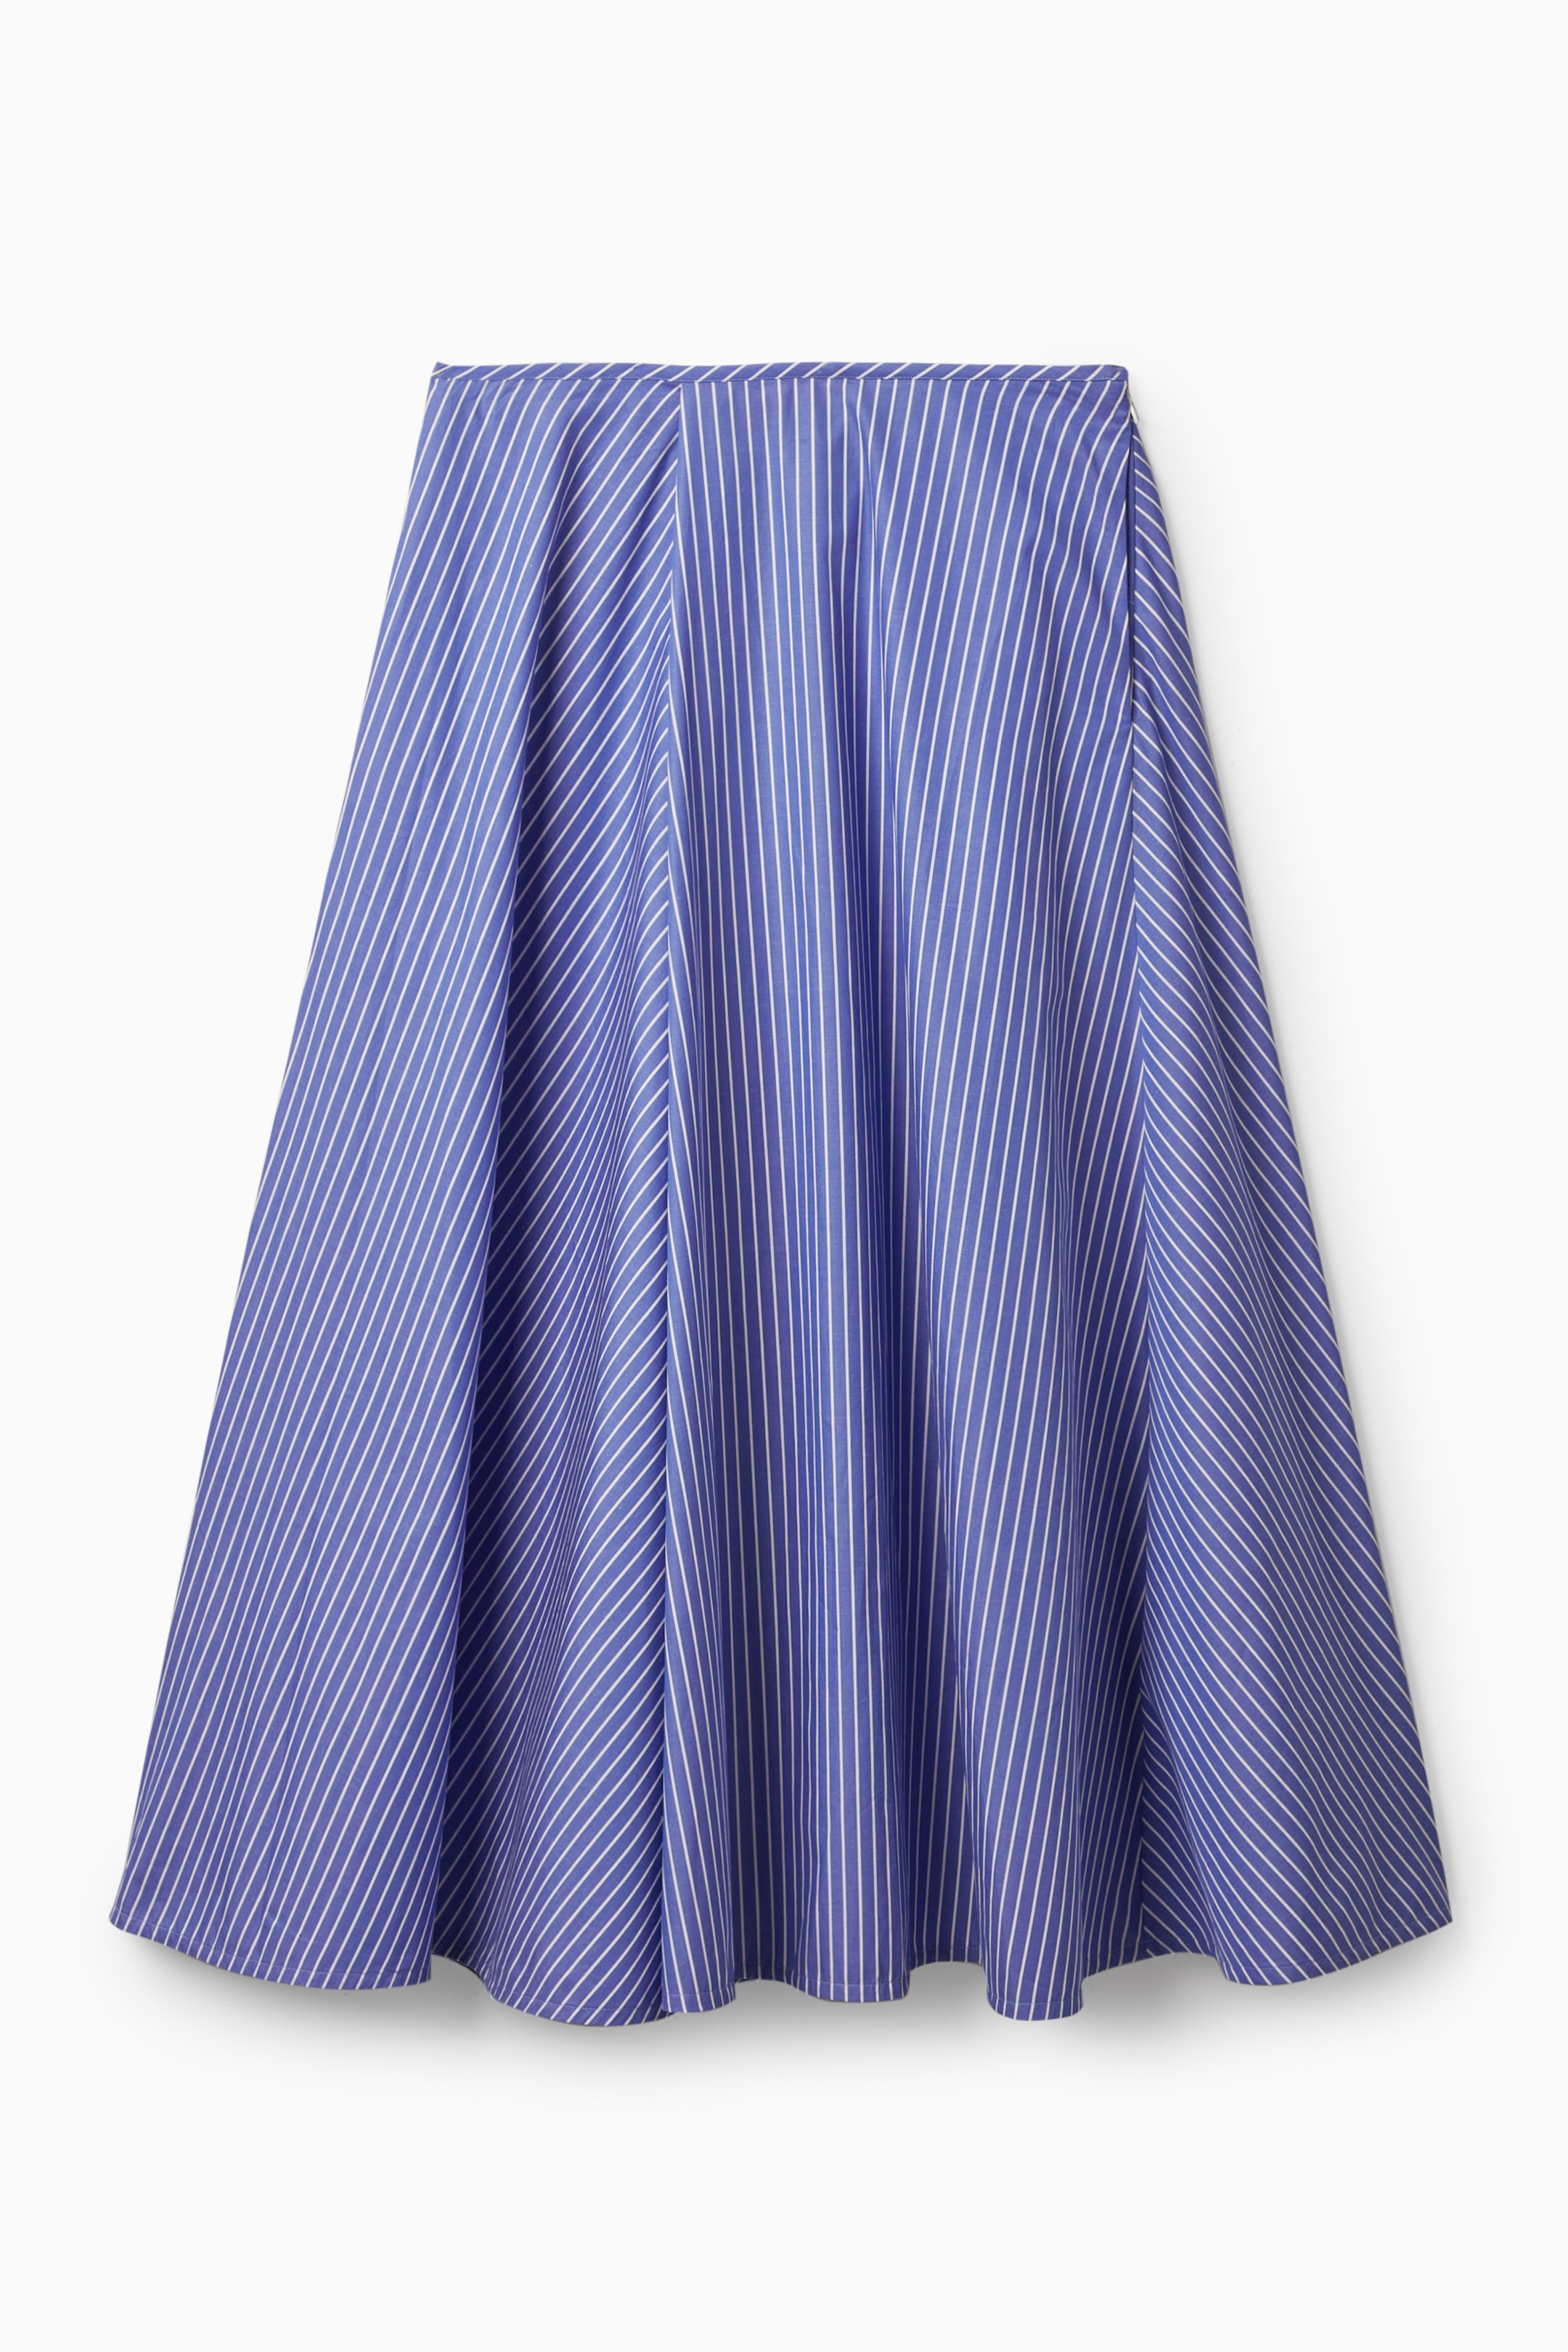 A-line striped midi skirt - LIGHT BLUE / WHITE - women COS AU